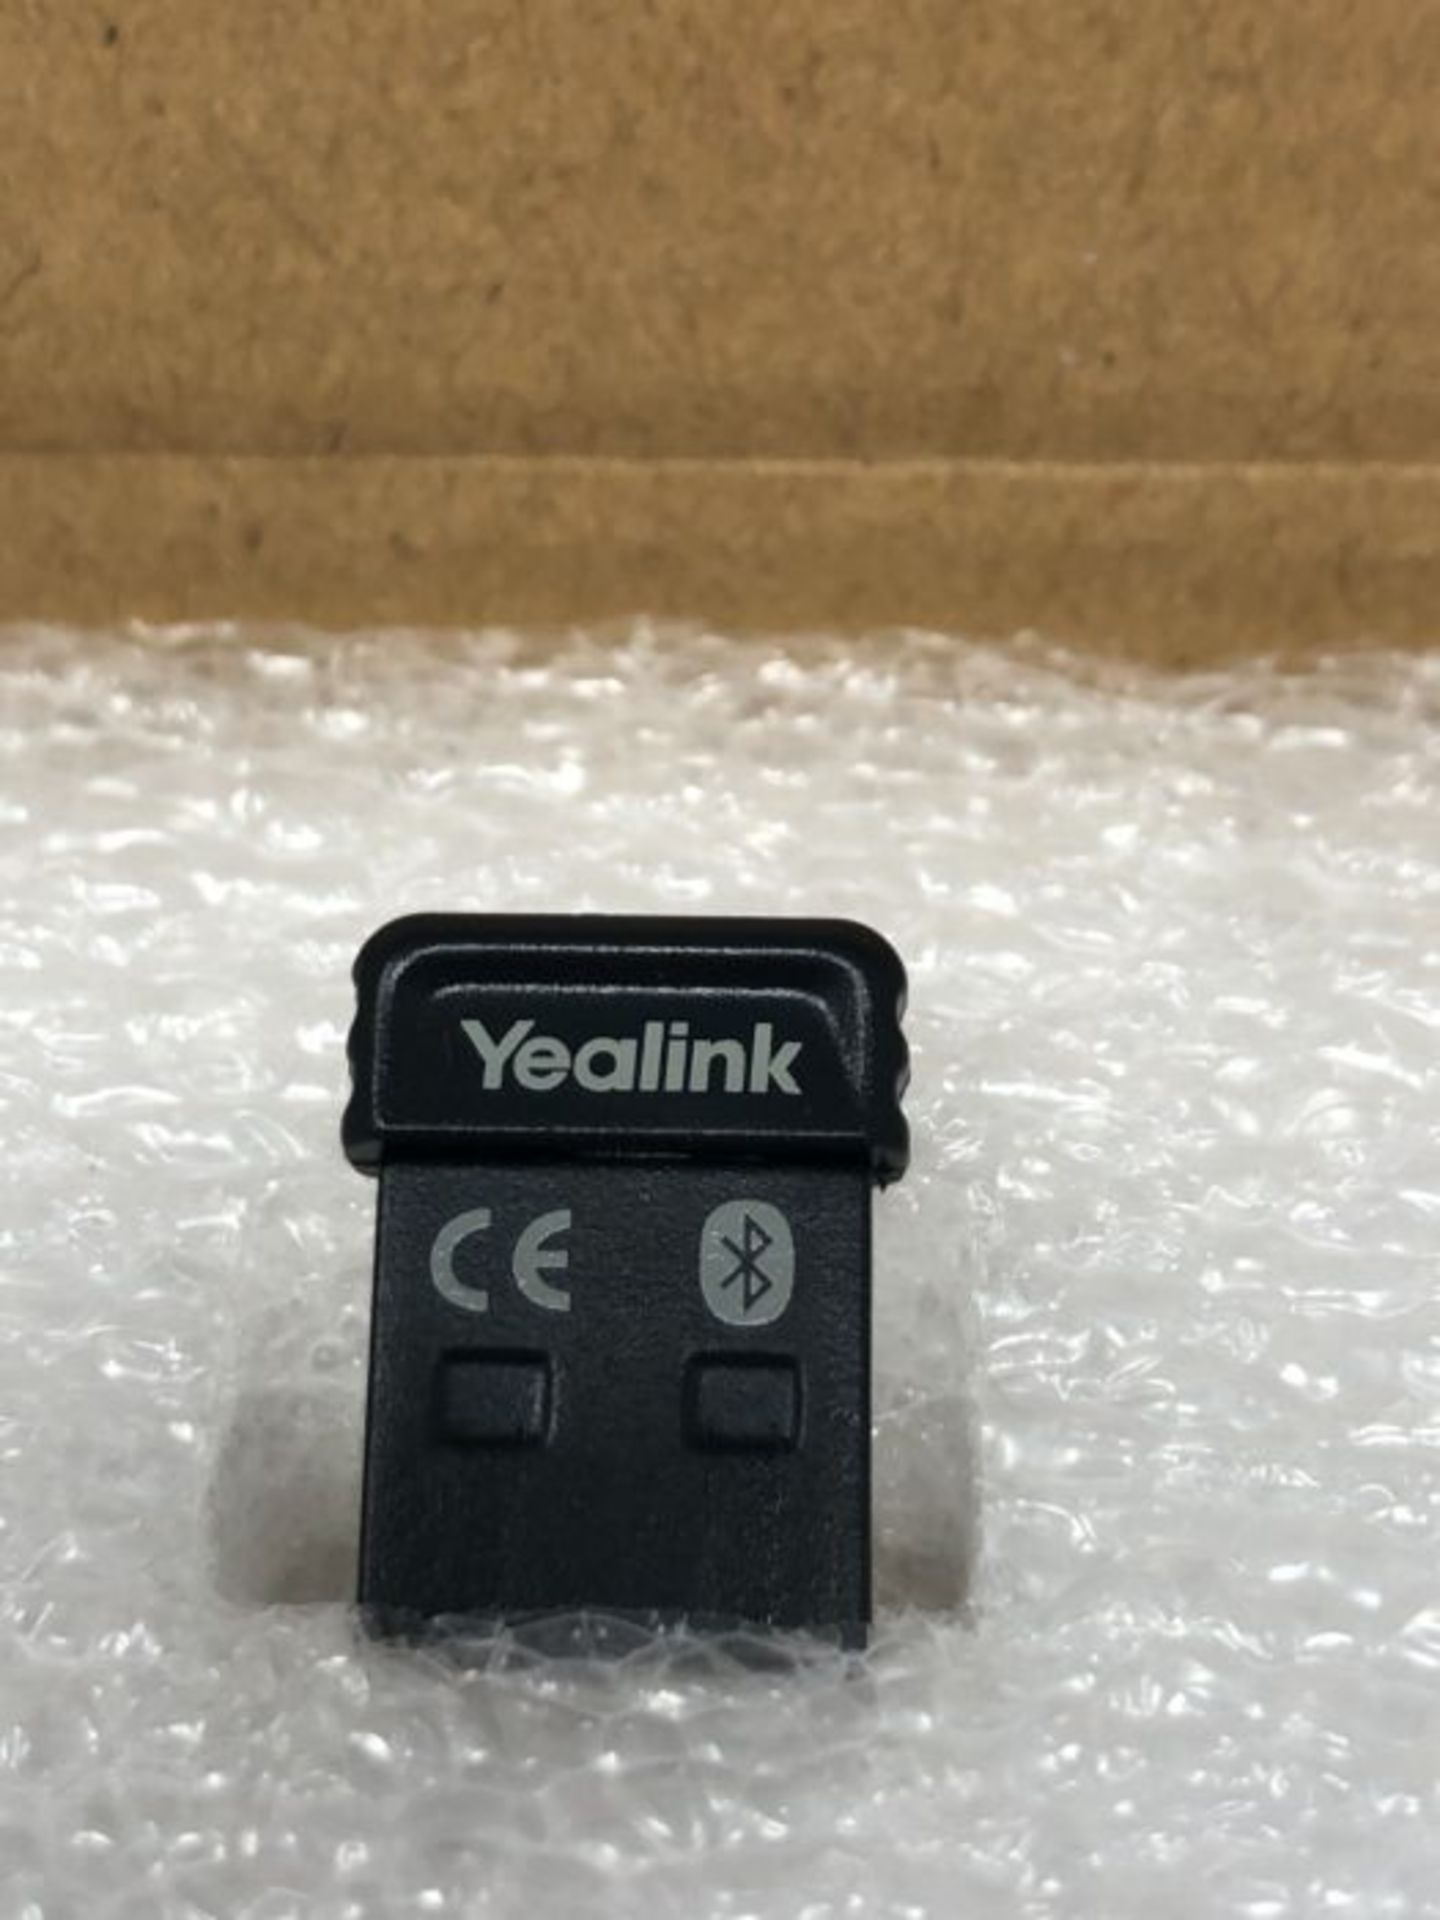 Yealink Bluetooth USB Dongle BT41 - Image 3 of 3